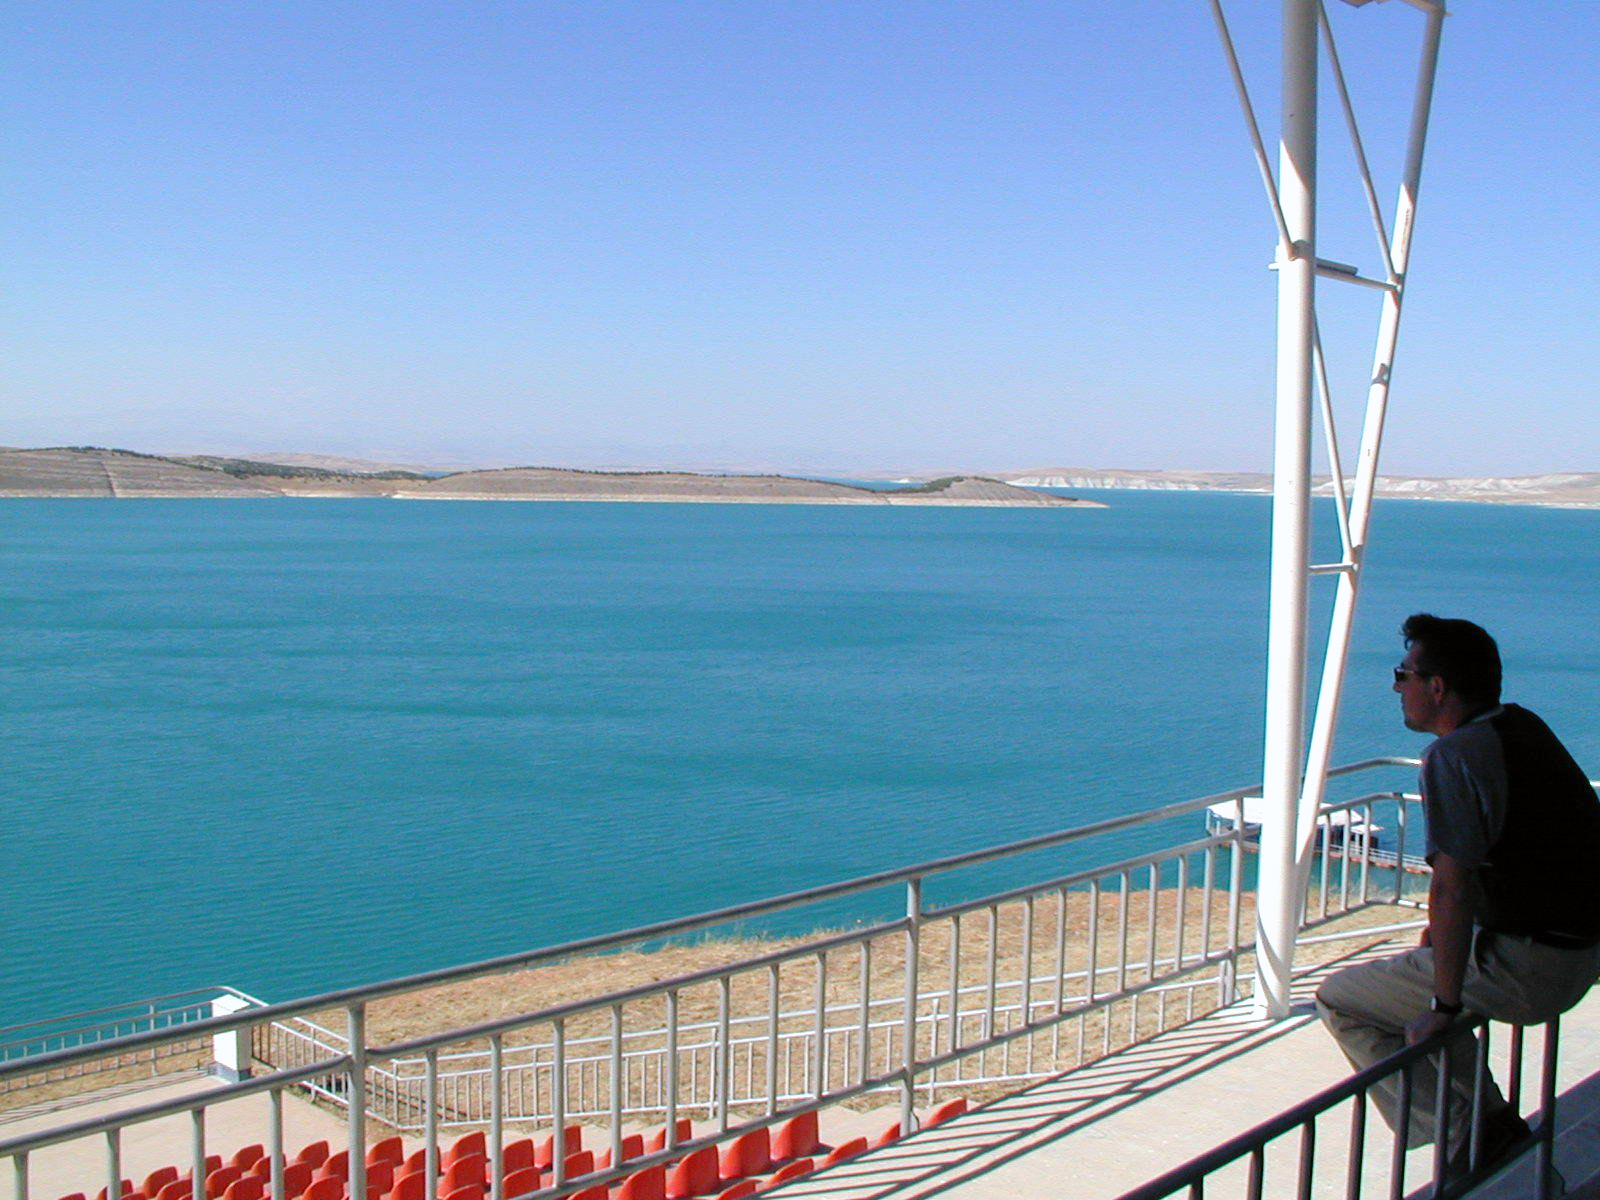 The Ataturk reservoir on the Euphrates River in Turkey. (Credit: USDA)